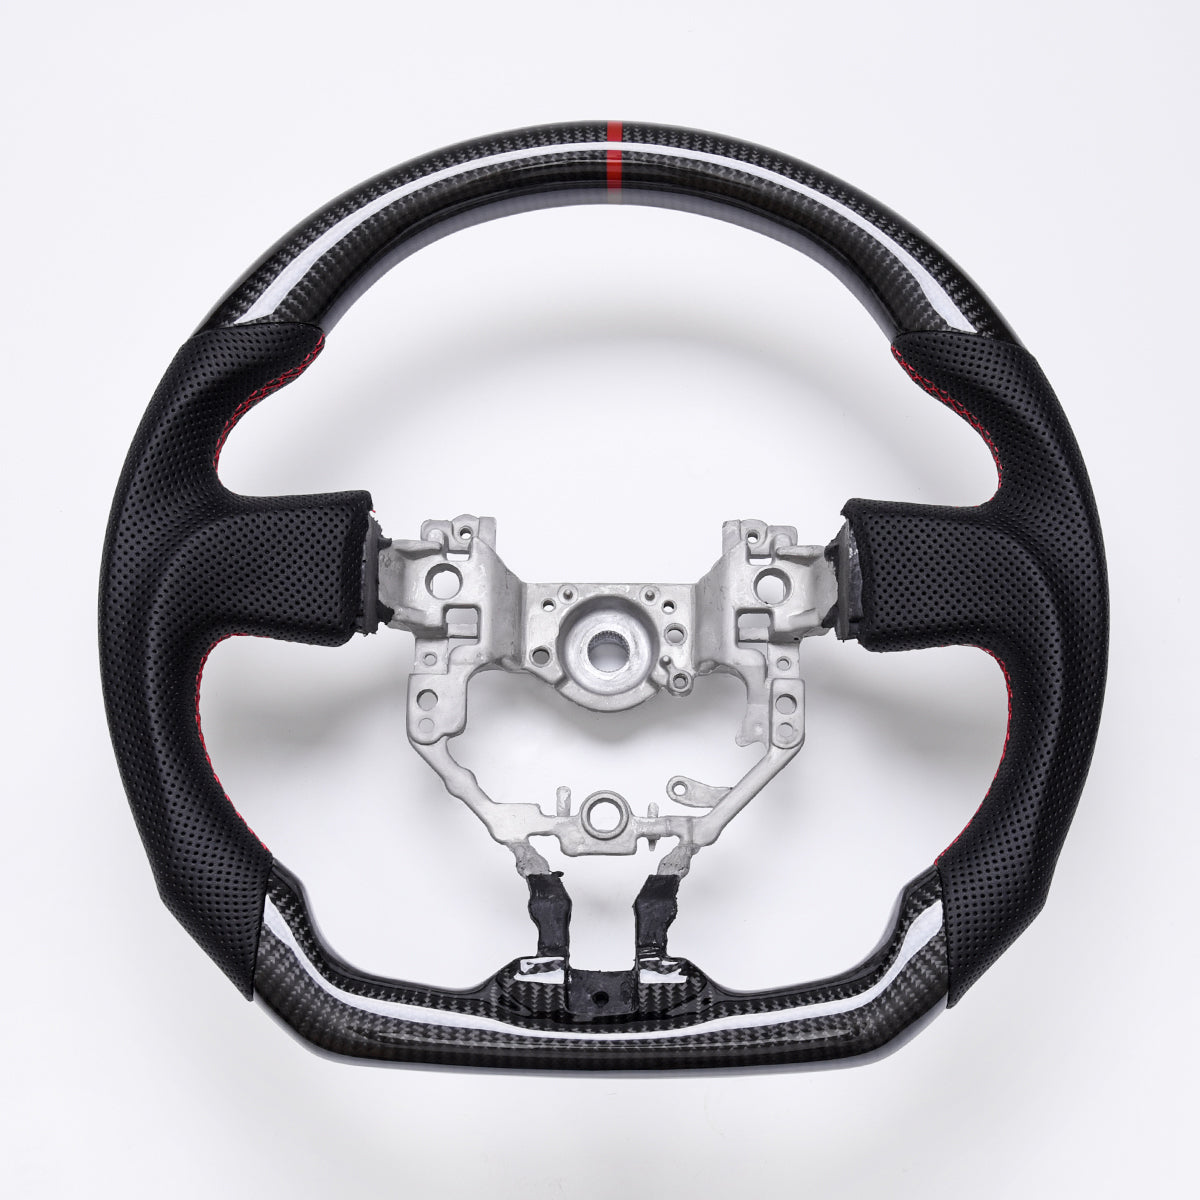 Revolve Carbon Fiber Steering Wheel | Scion FRS/ Subaru BRZ/ Toyota 86 2013-2016 - revolvesteering